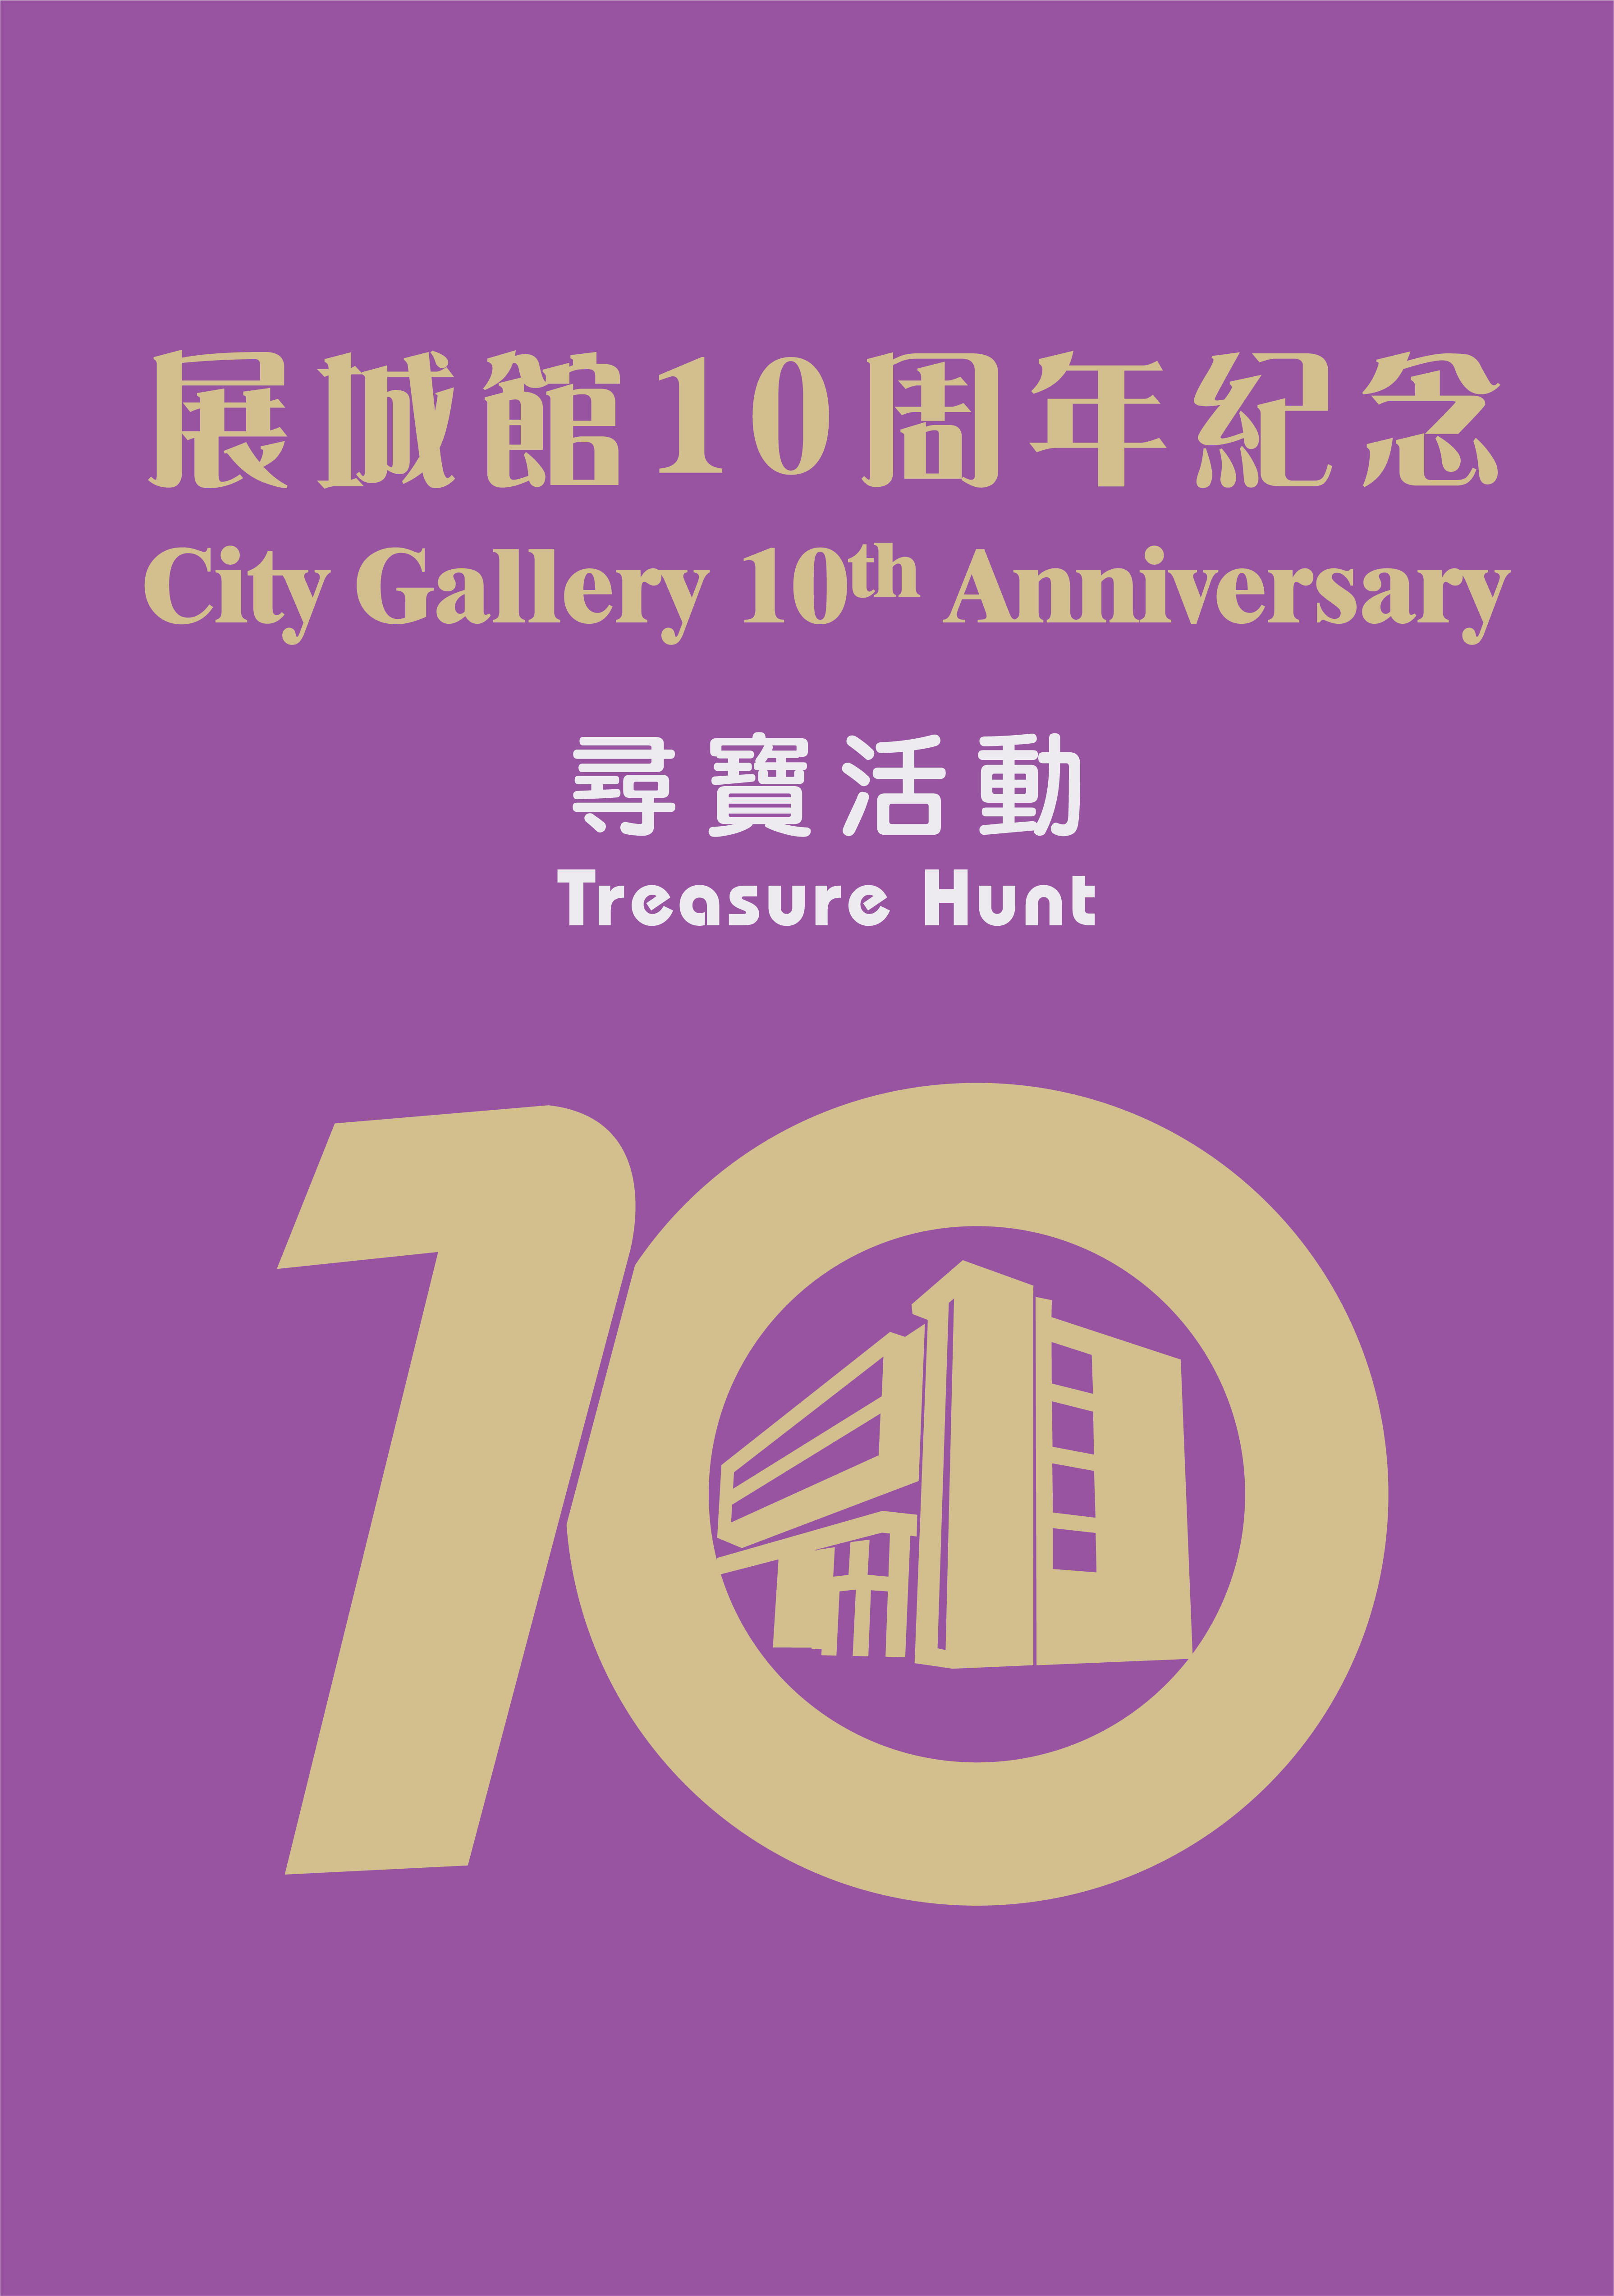 City Gallery 10th Anniversary Treasure Hunt